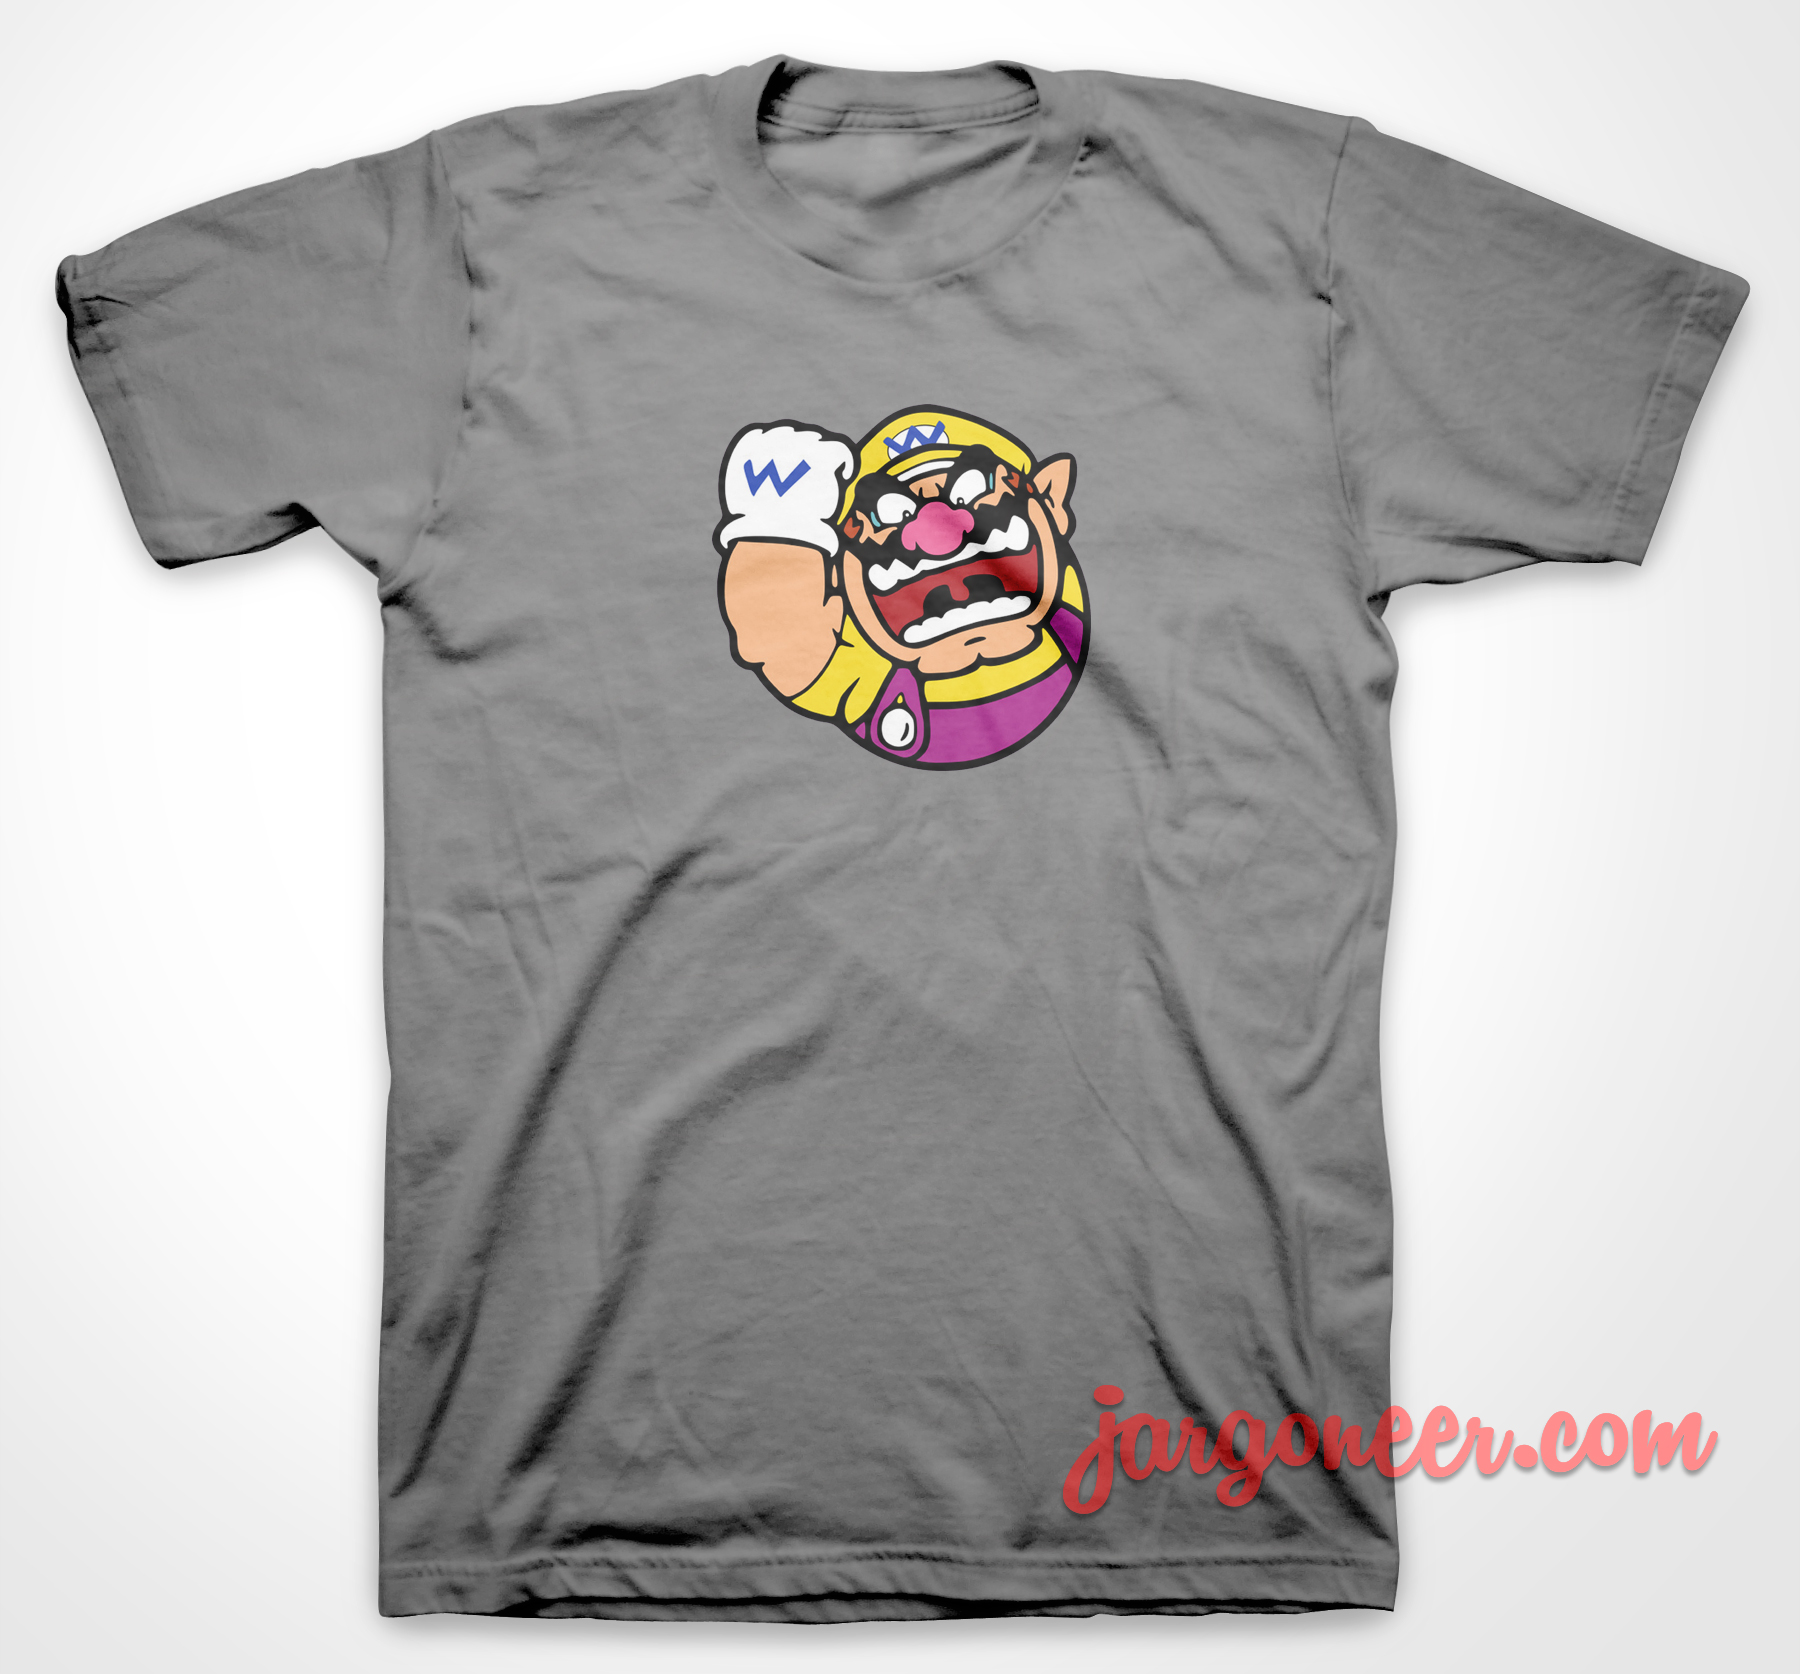 Super Warrior Parody - Shop Unique Graphic Cool Shirt Designs